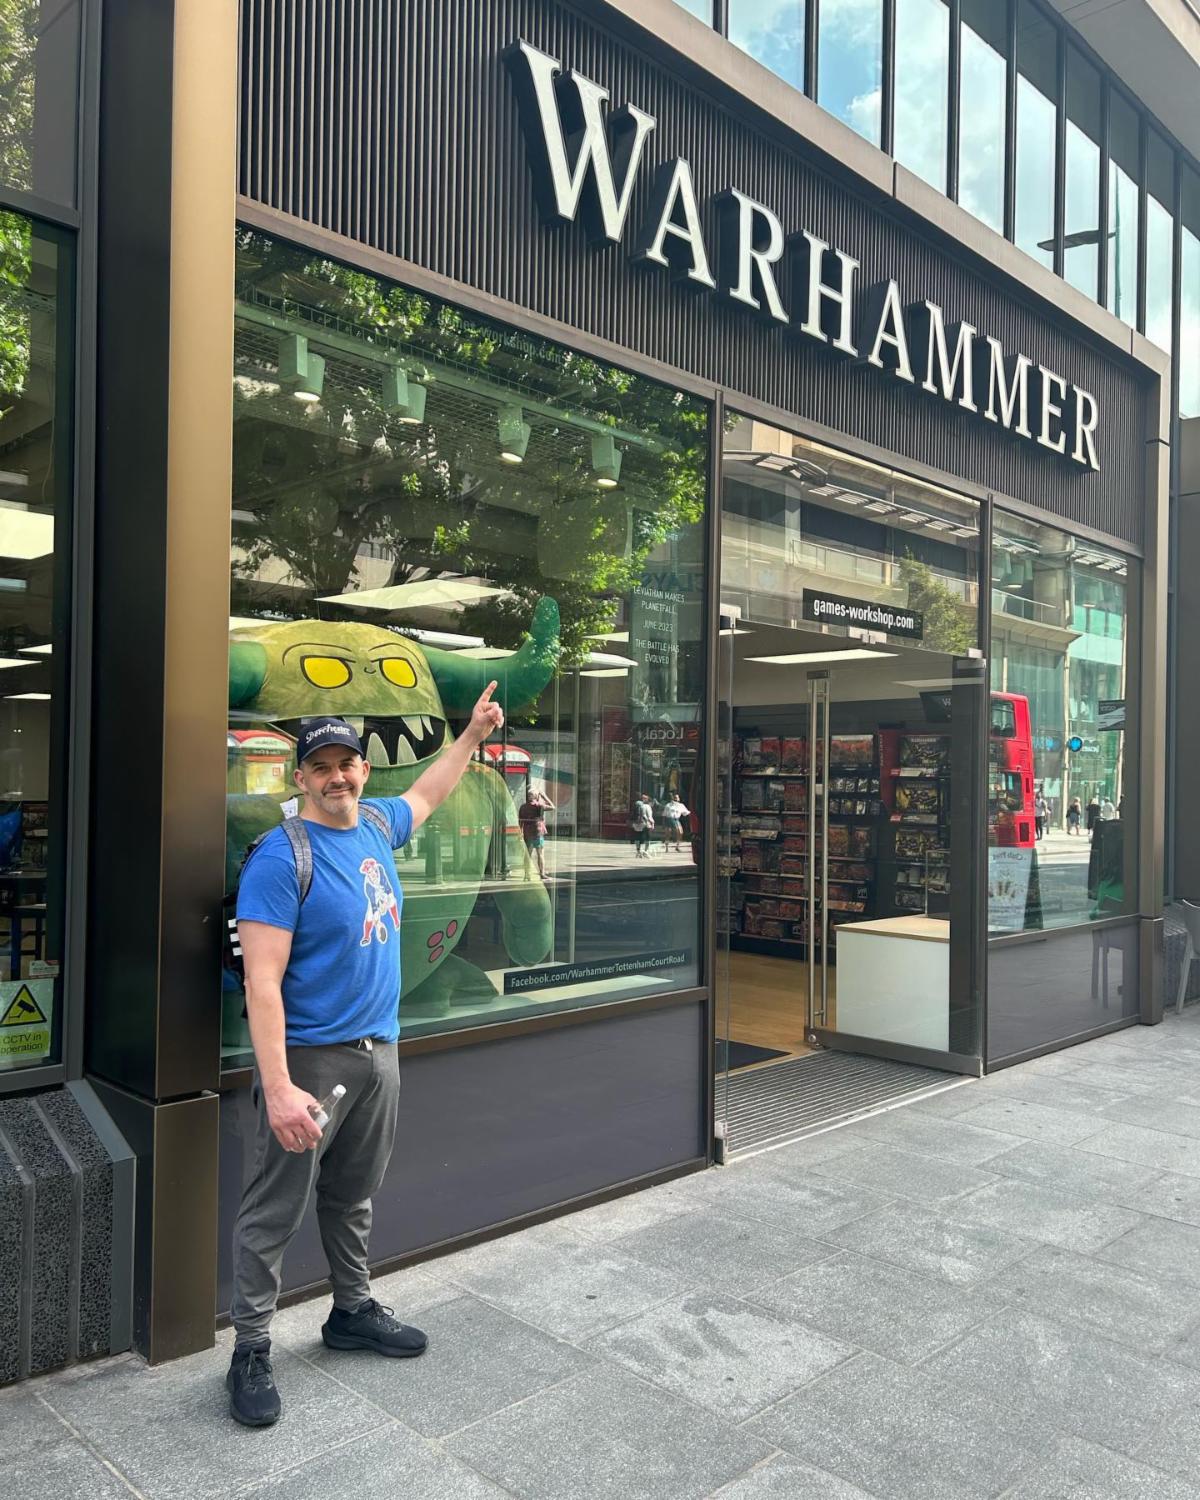 Warhammer Tottenham Court Road